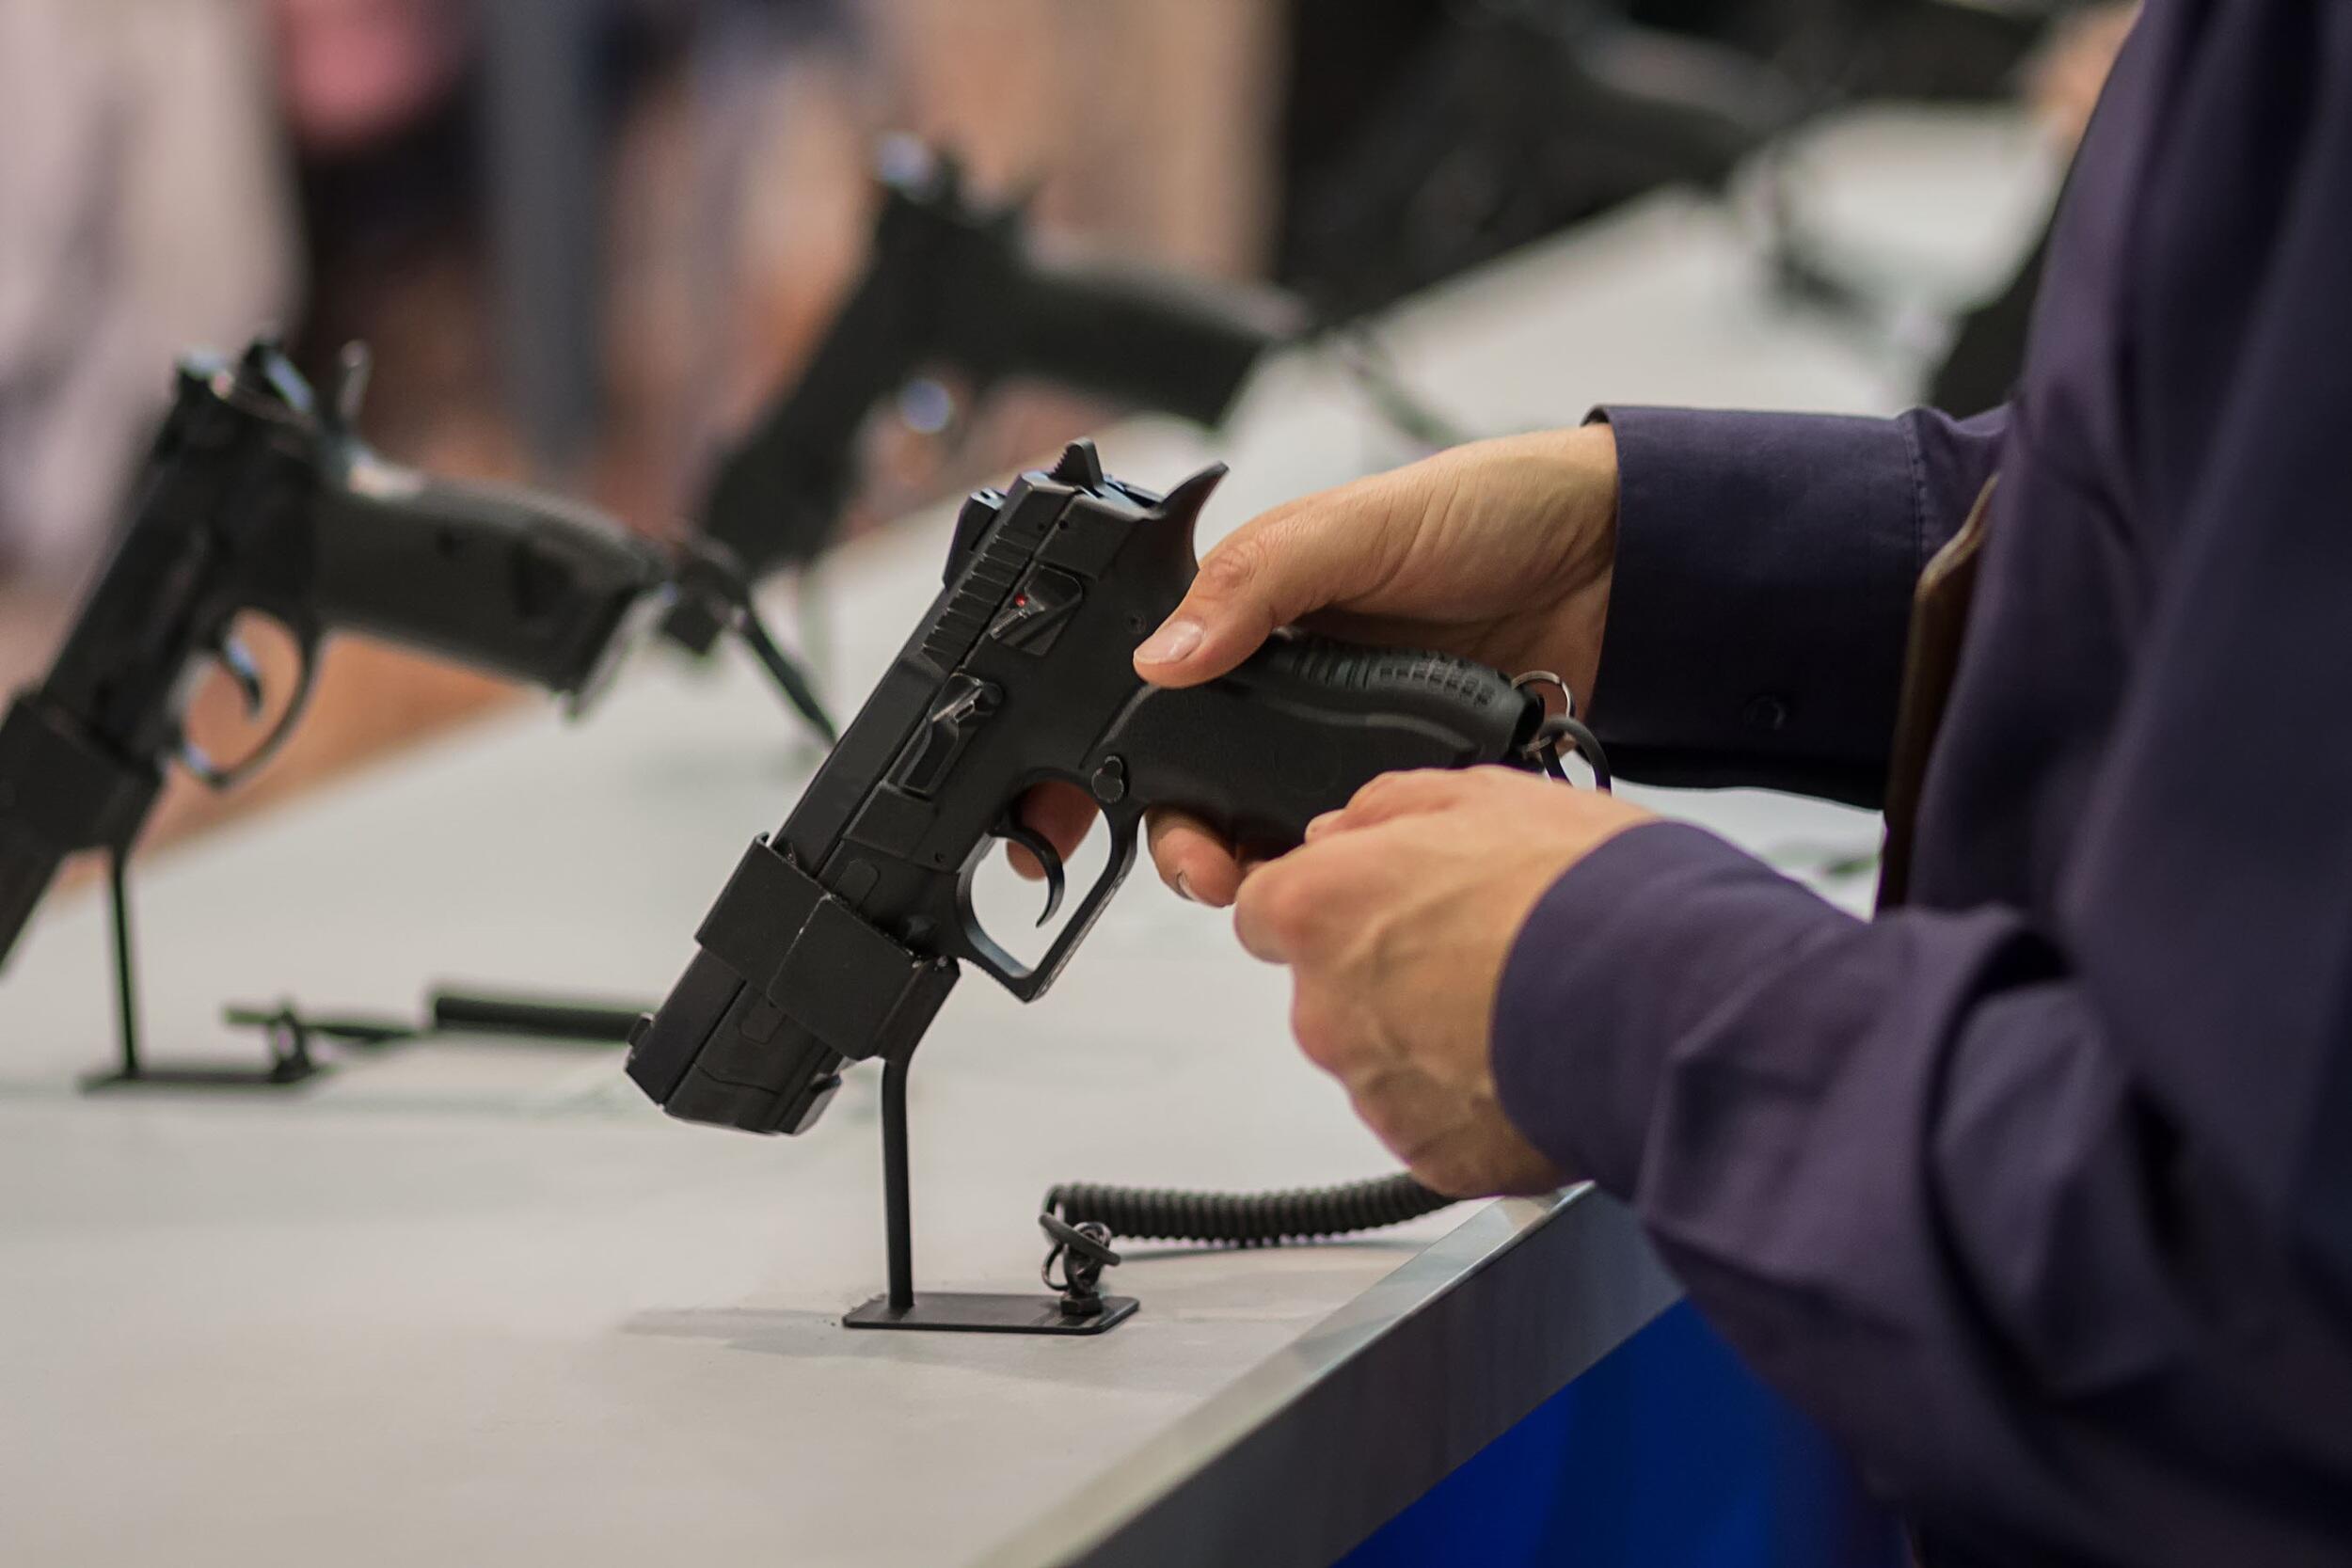 A person holding a handgun at a gun show.